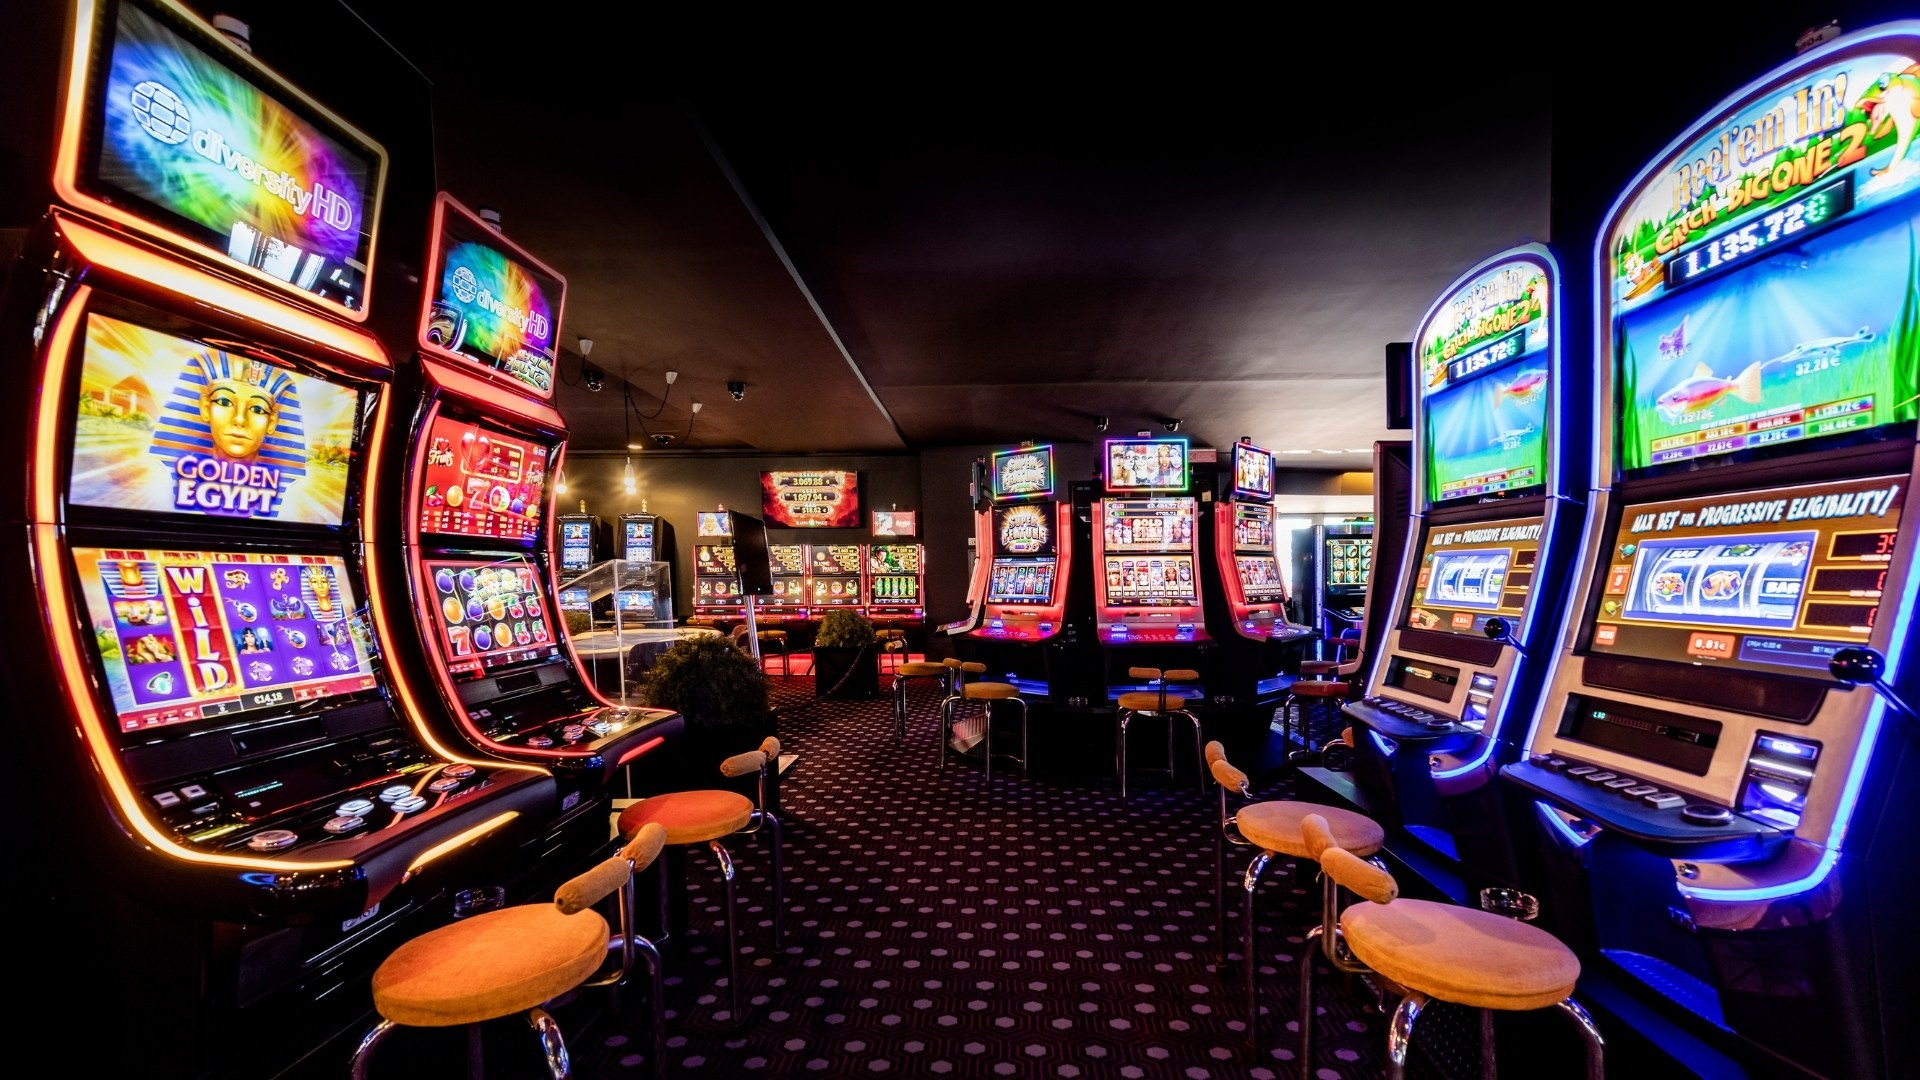 The Best Way To online-casinos